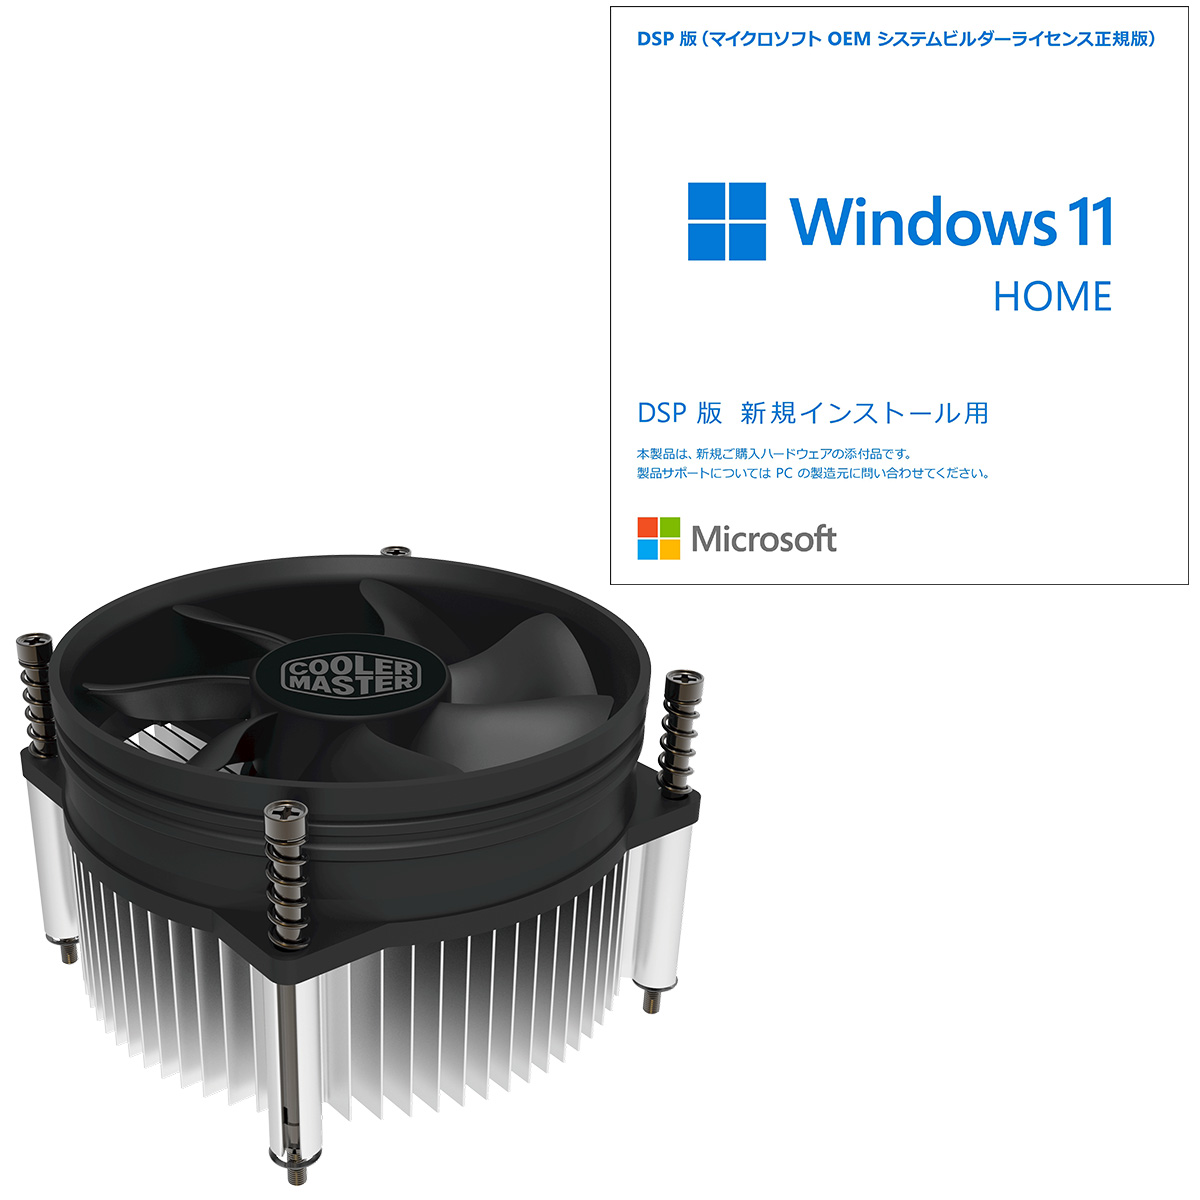 Windows 11 home 64bit 日本語版 DSP DVD CPUクーラーセット